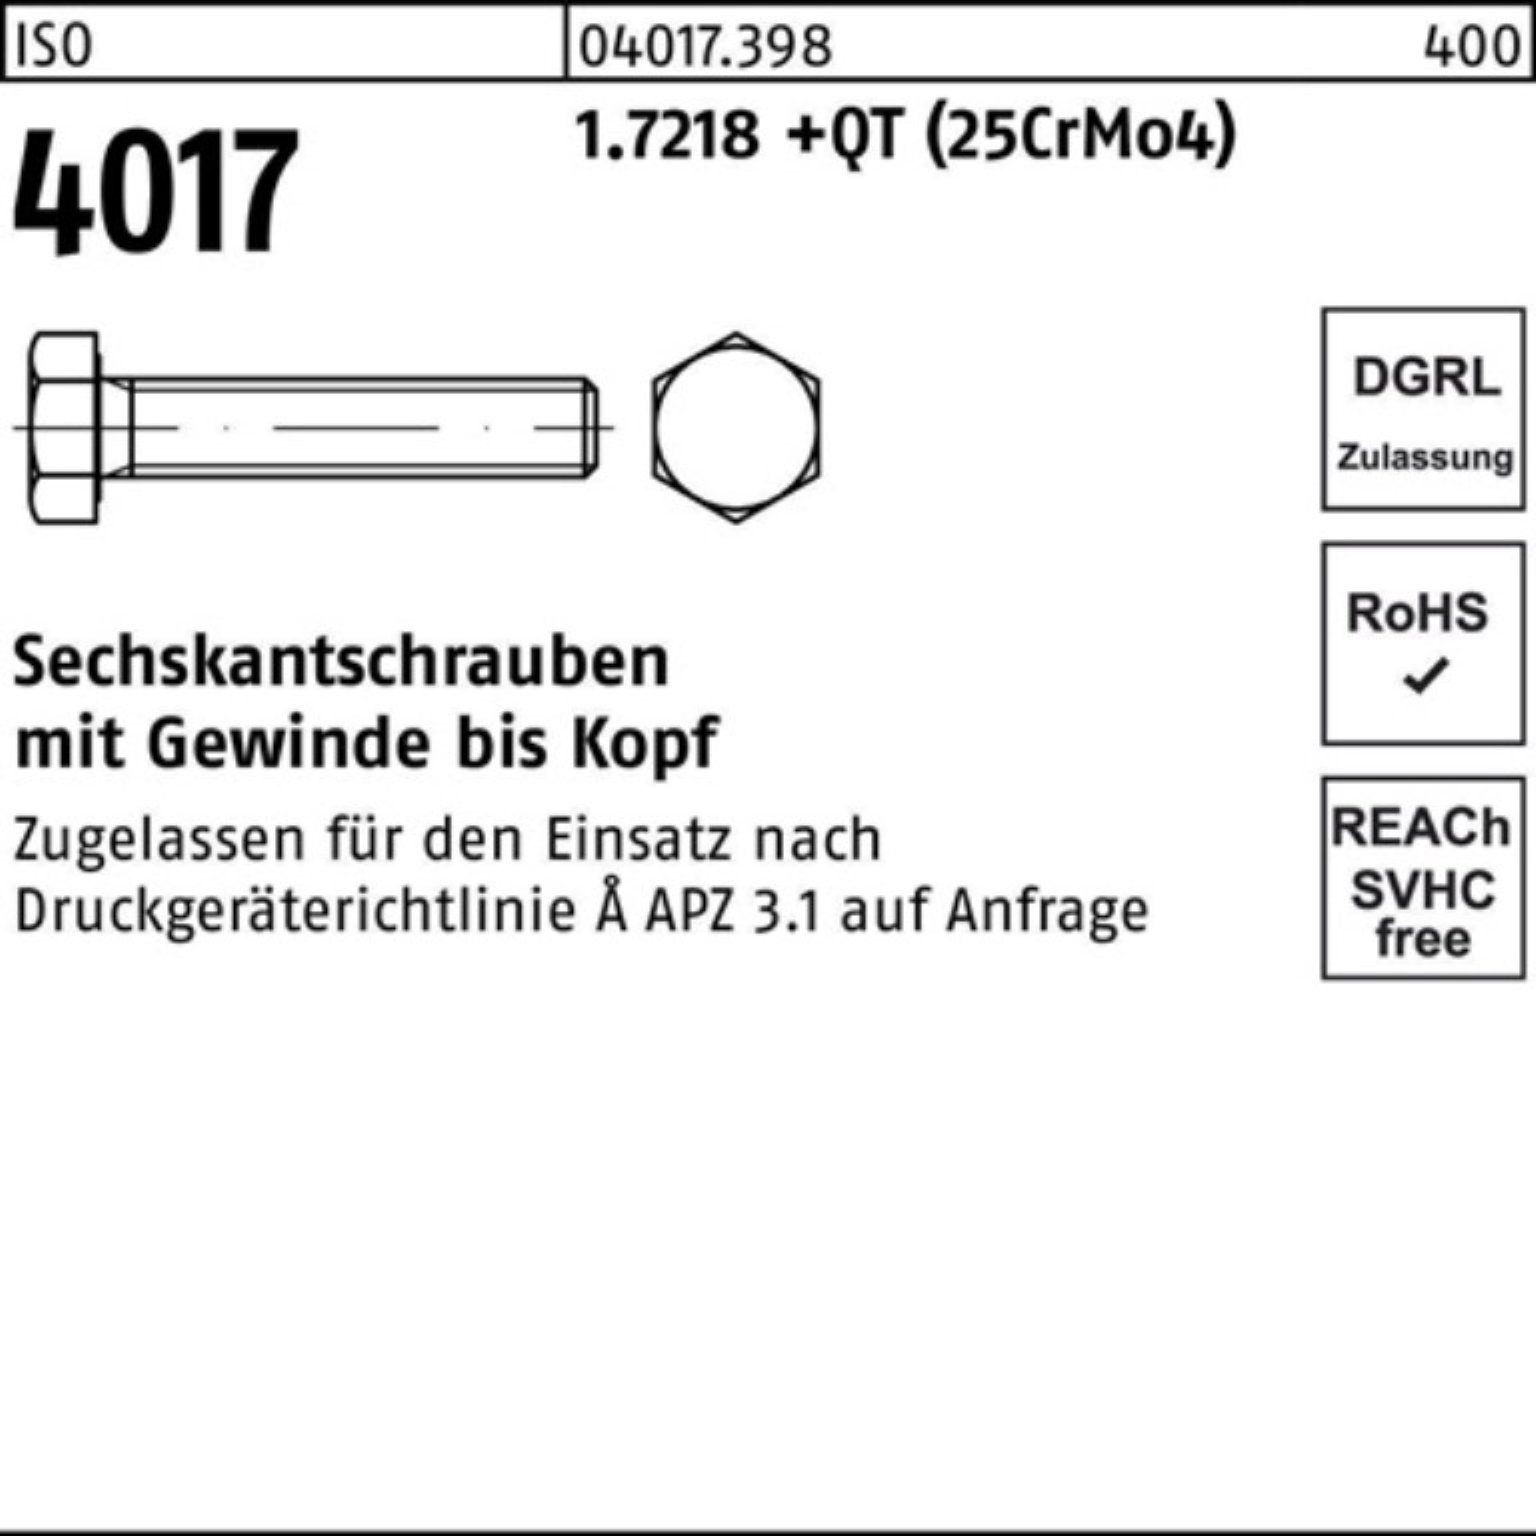 Bufab Sechskantschraube 100er Pack Sechskantschraube (25CrMo4) ISO VG +QT 35 1.7218 M20x 4017